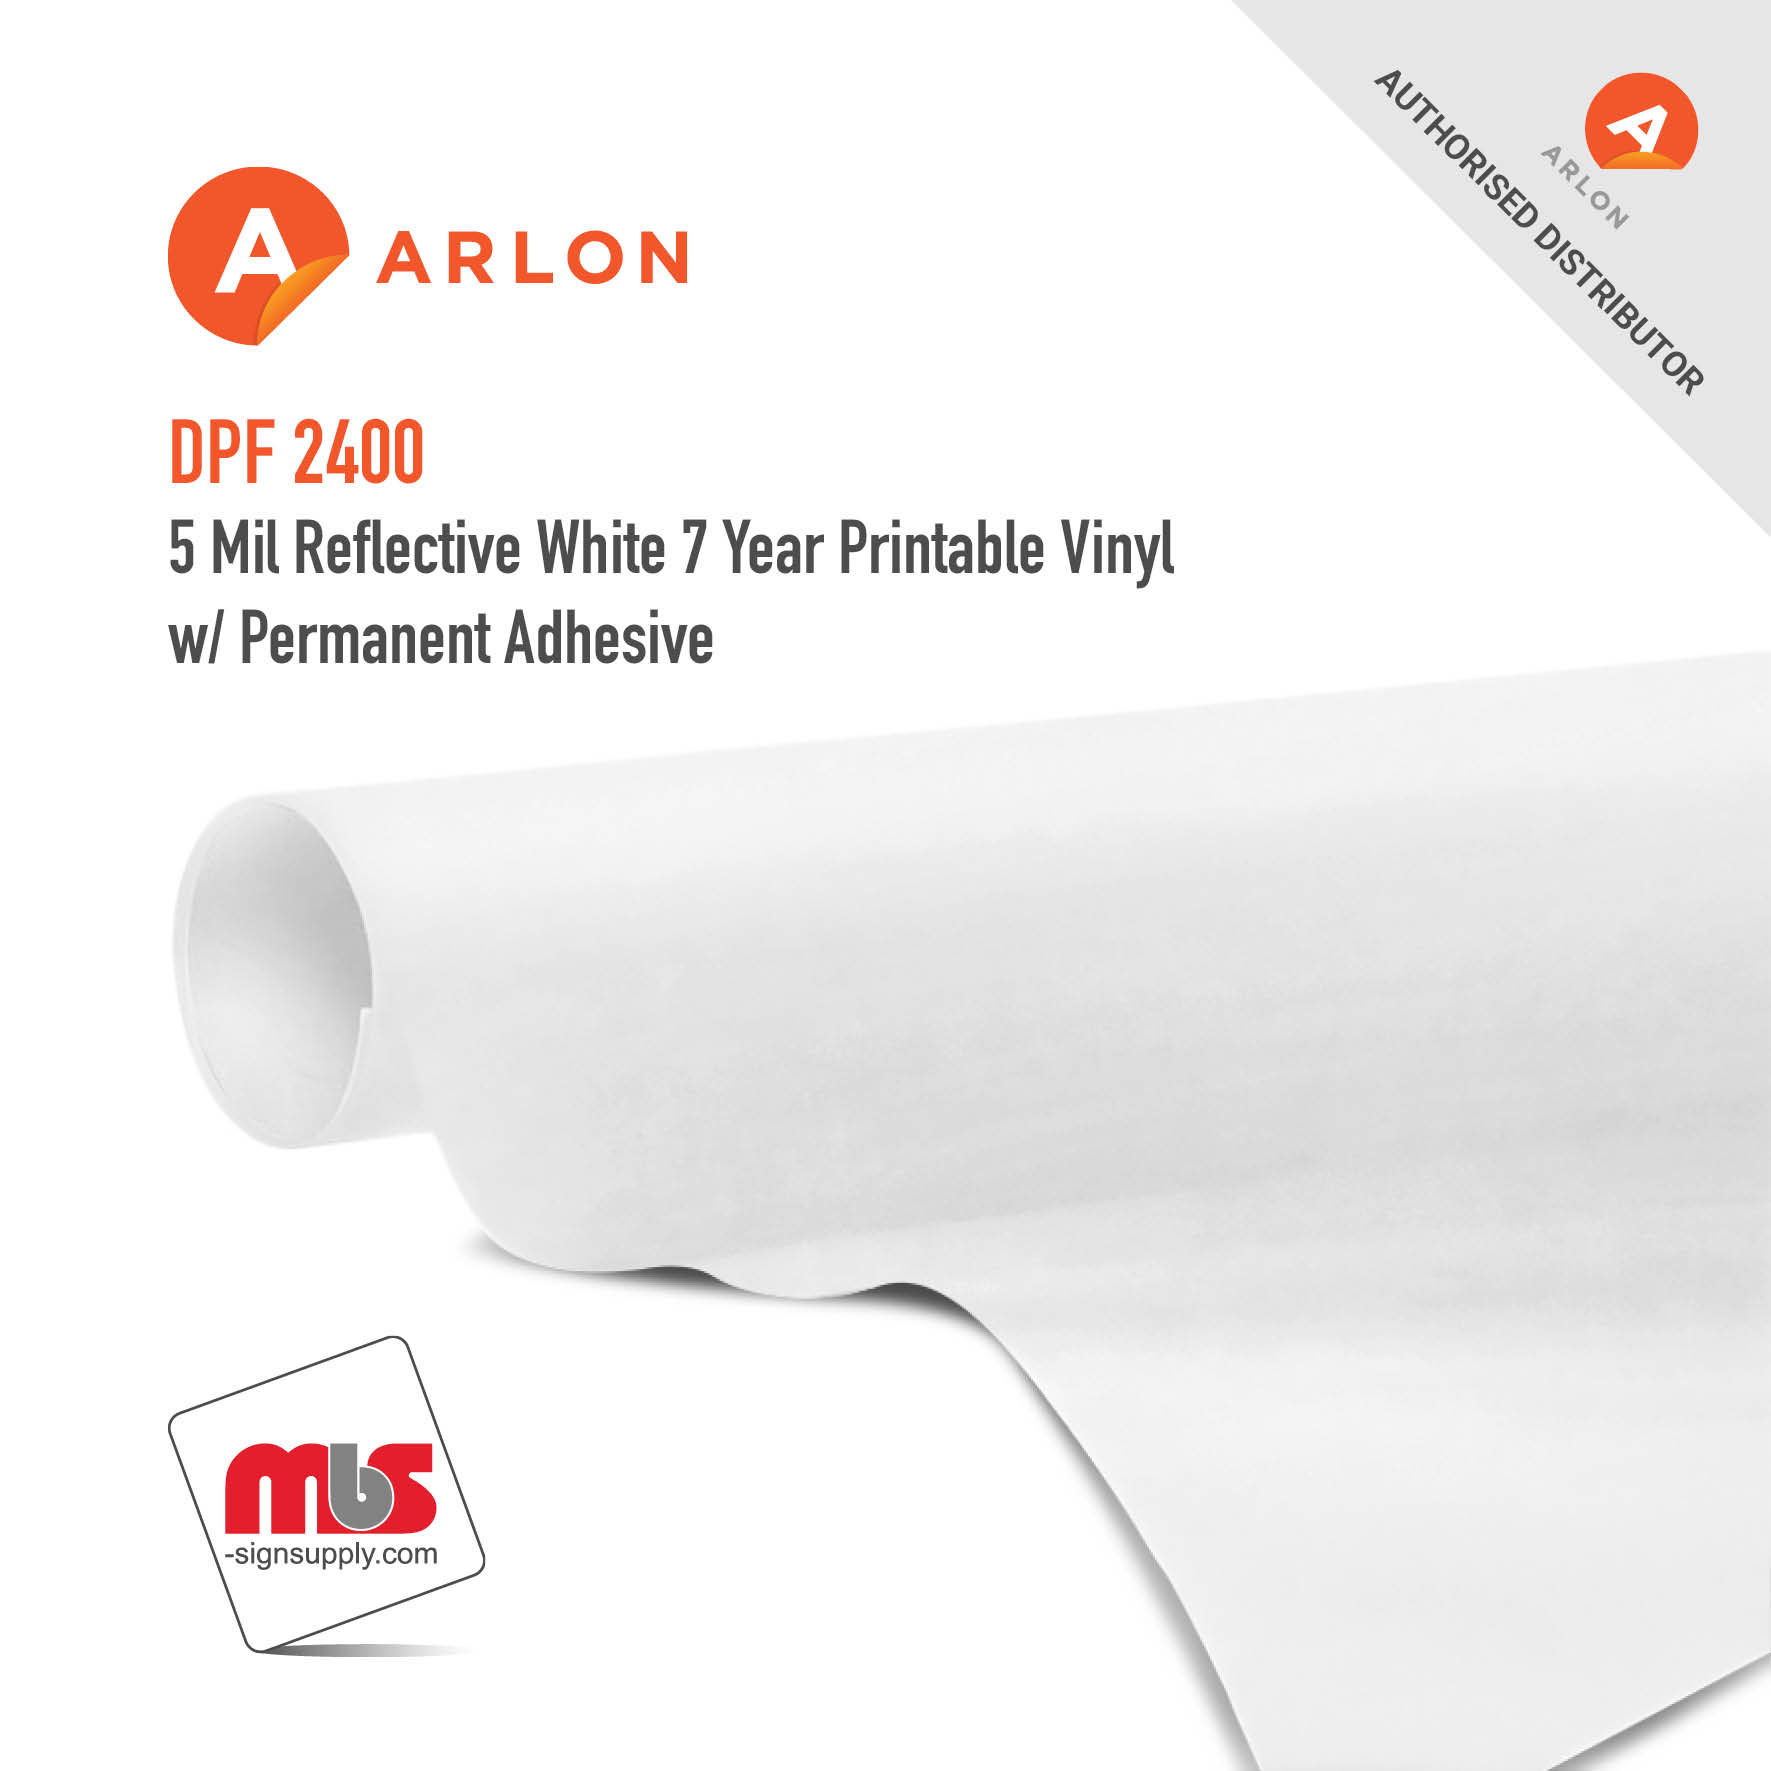 48'' x 10 Yard Roll - Arlon DPF 2400 5 Mil Reflective White 7 Year Printable Vinyl w/ Permanent Adhesive